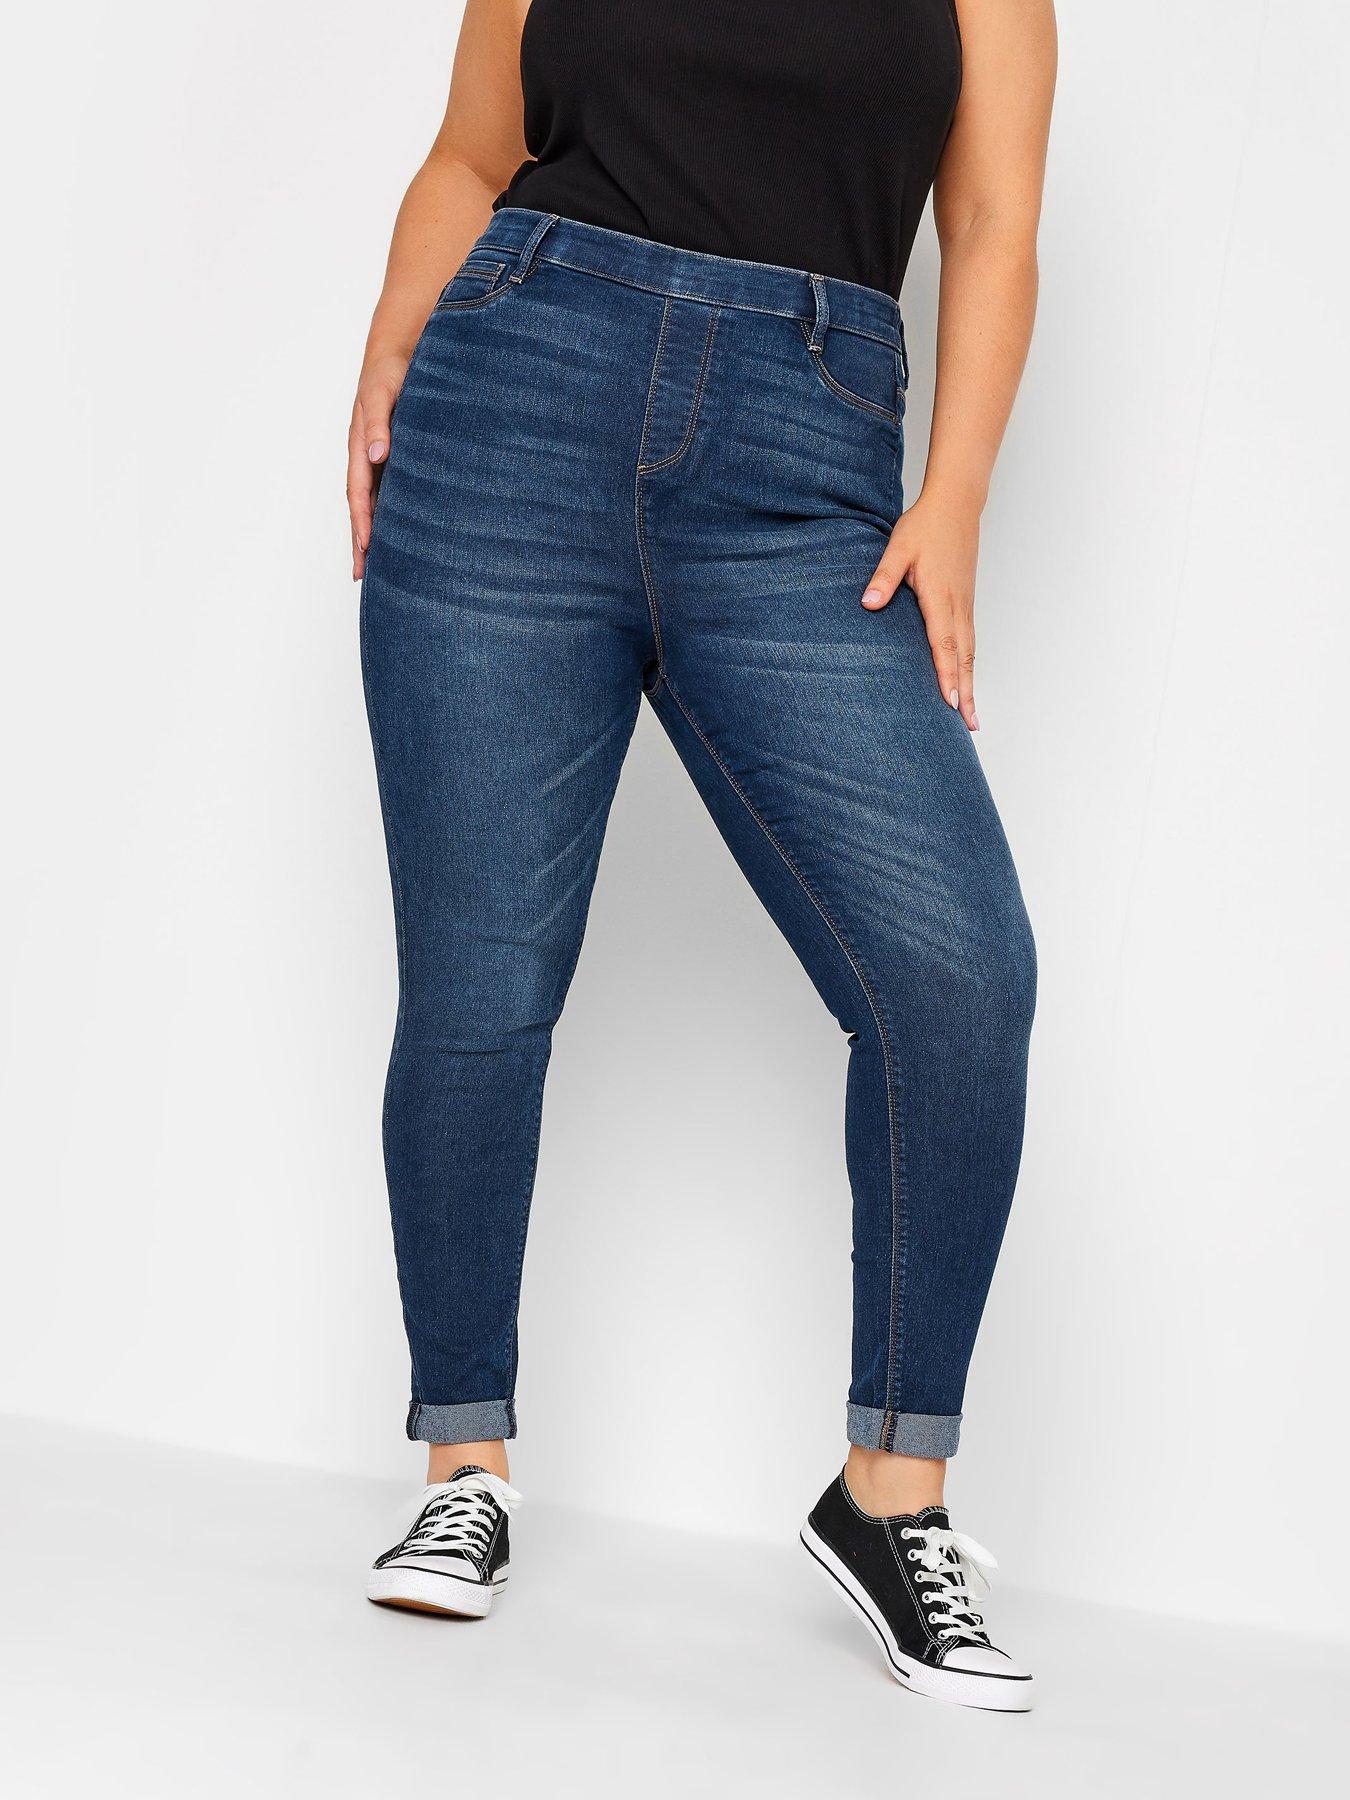 Ladies Stripe Denim Jeans Stretch Jeggings Mid Rise Slim Fit Pants Plus  Sizes UK